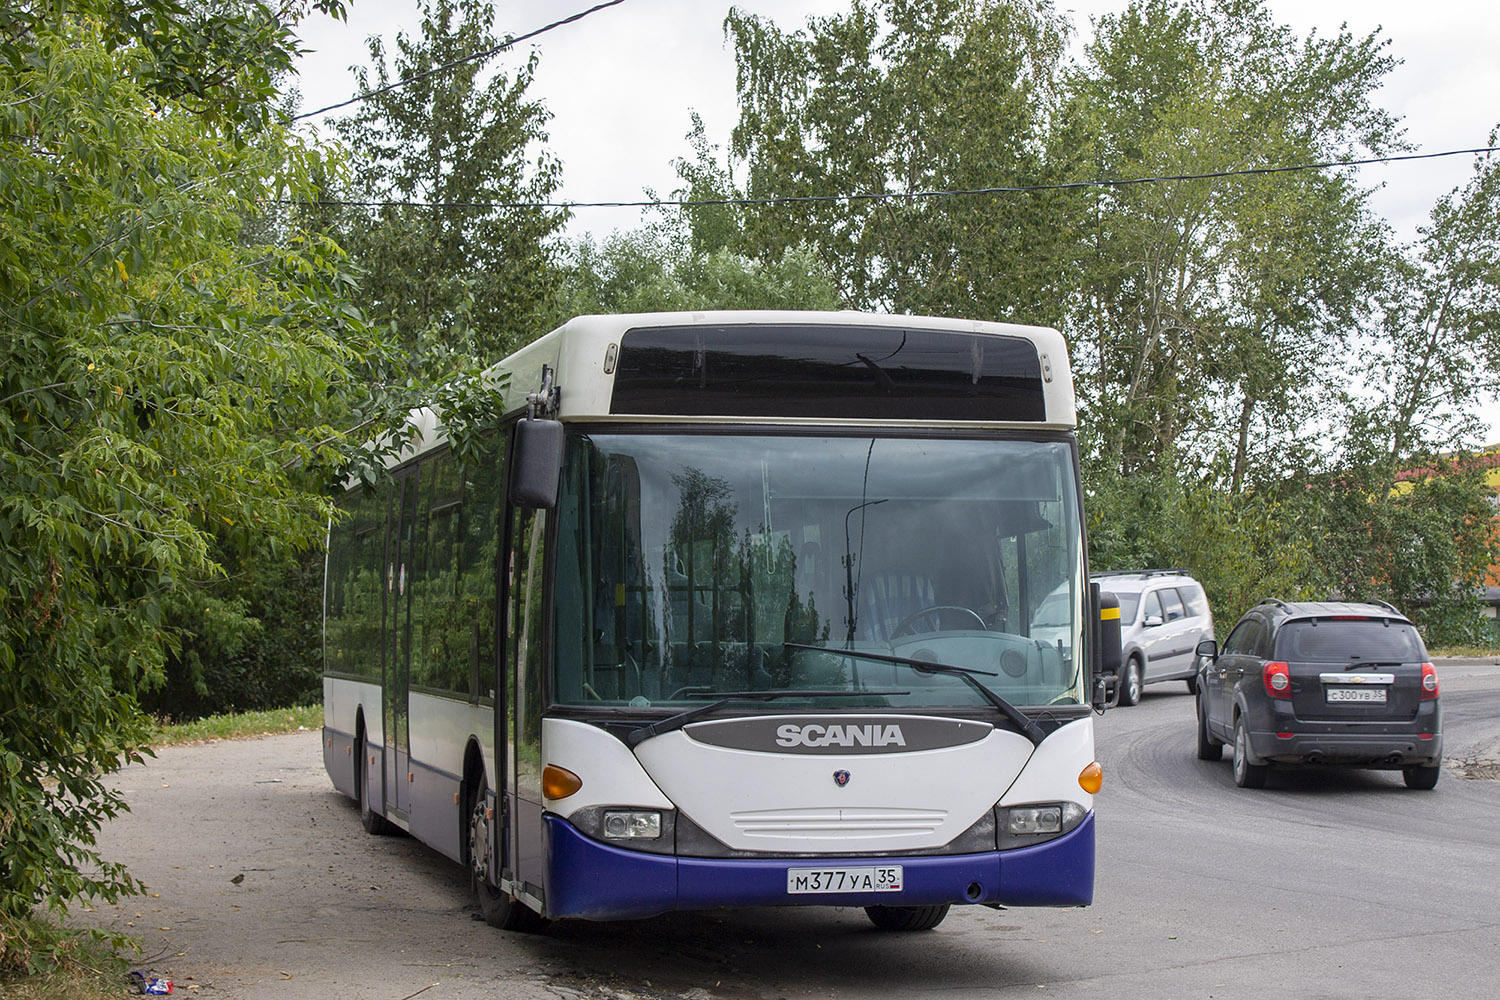 Cherepovets, Scania OmniLink CL94UB 4X2LB # М 377 УА 35